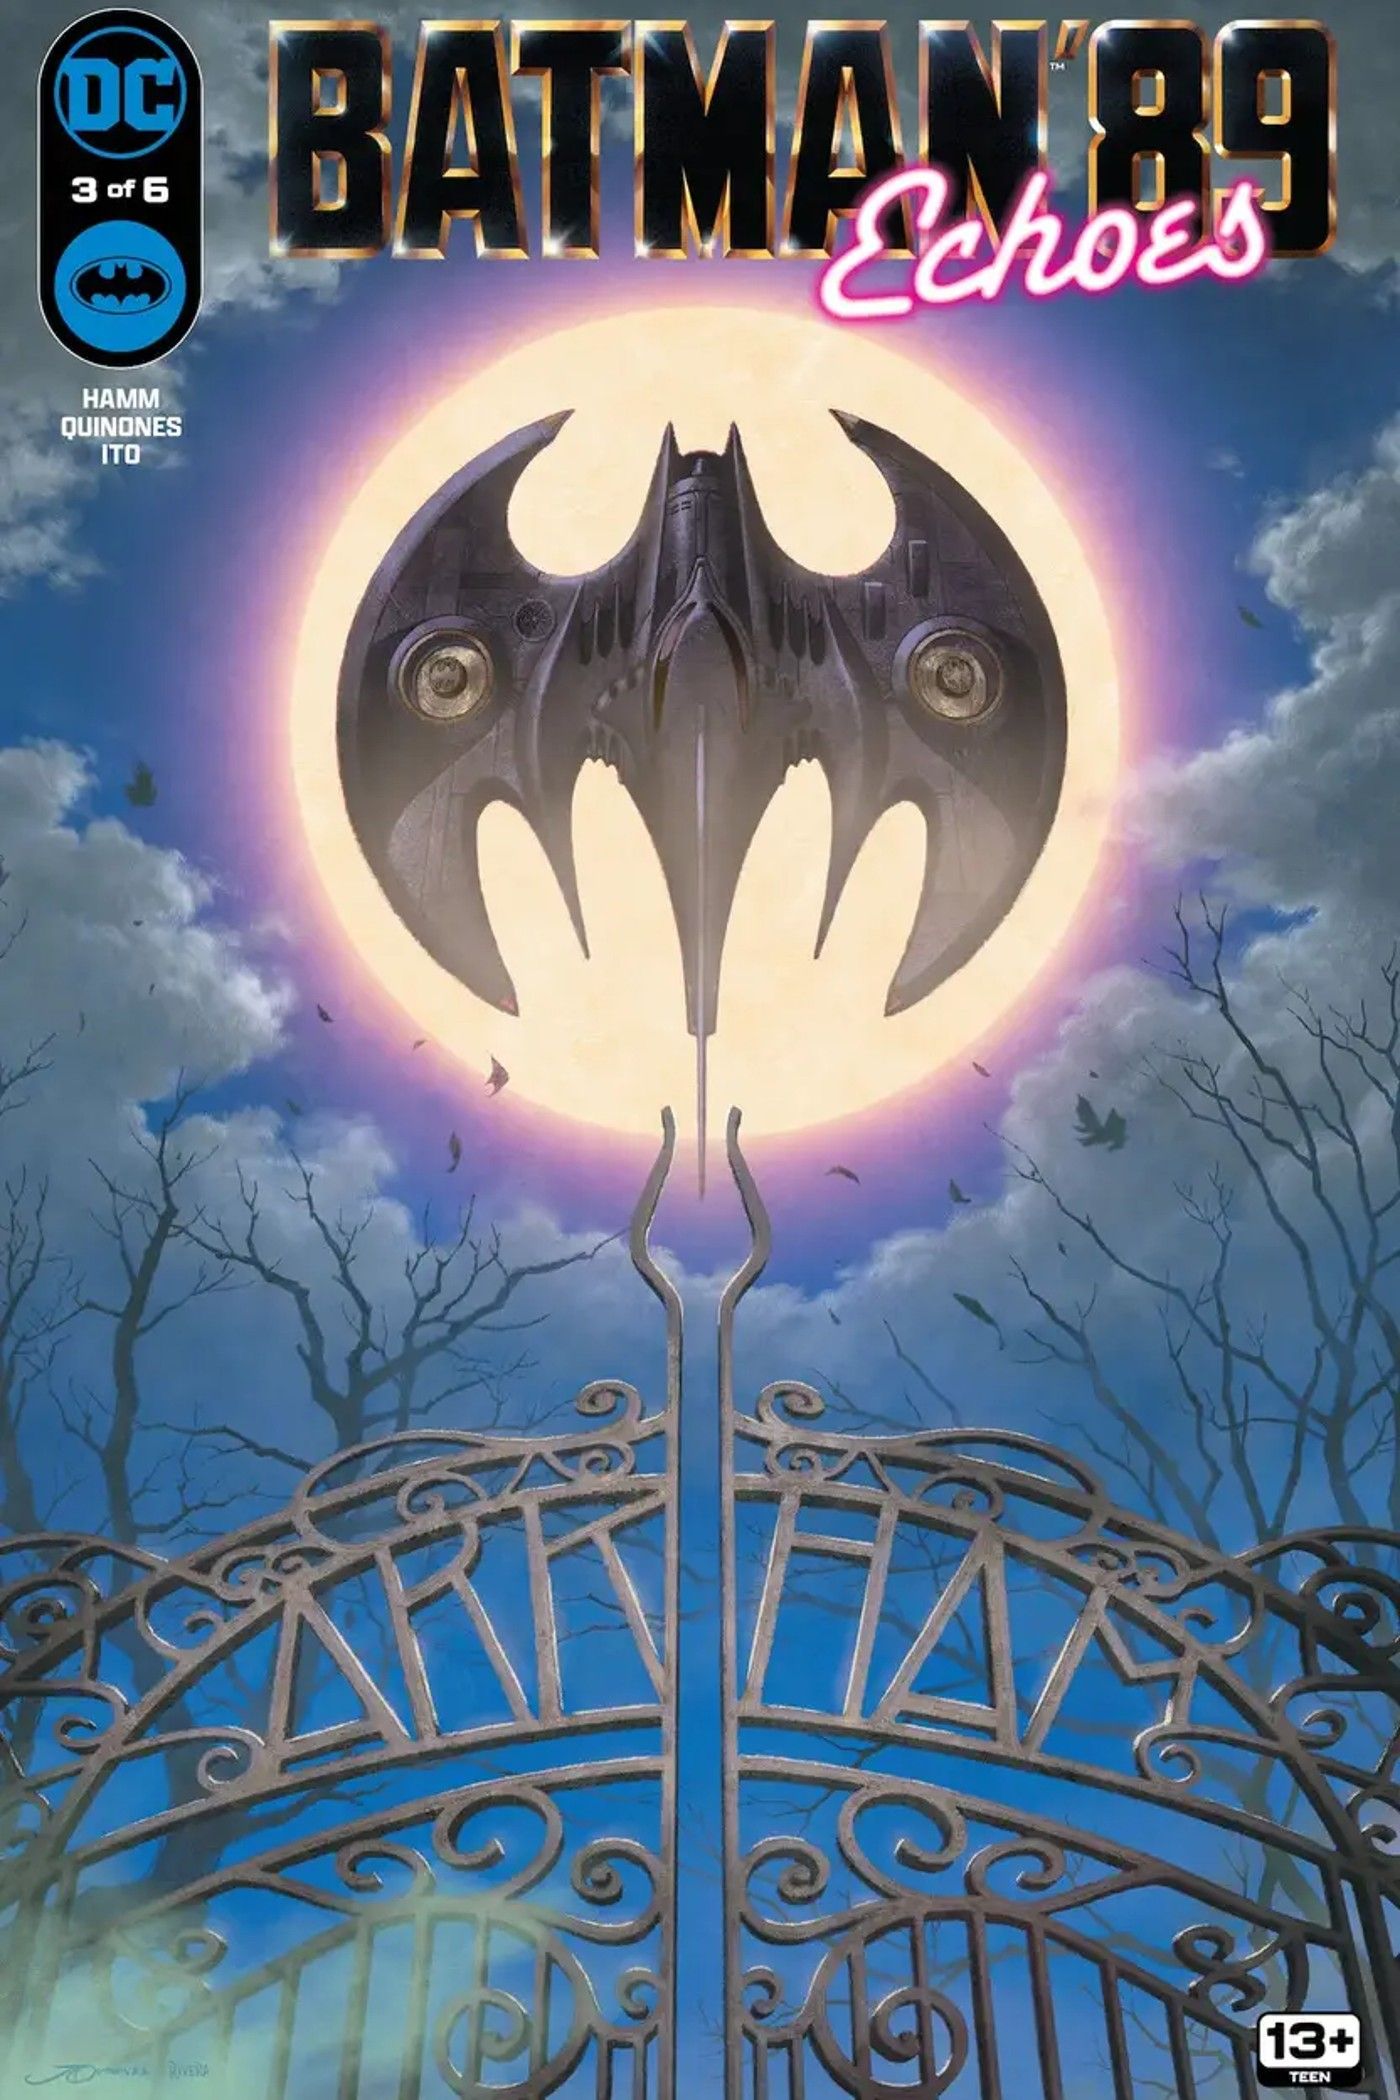 Capa principal de Batman 89 Echoes 3: o Batwing paira sob a lua perto dos portões de Arkham.